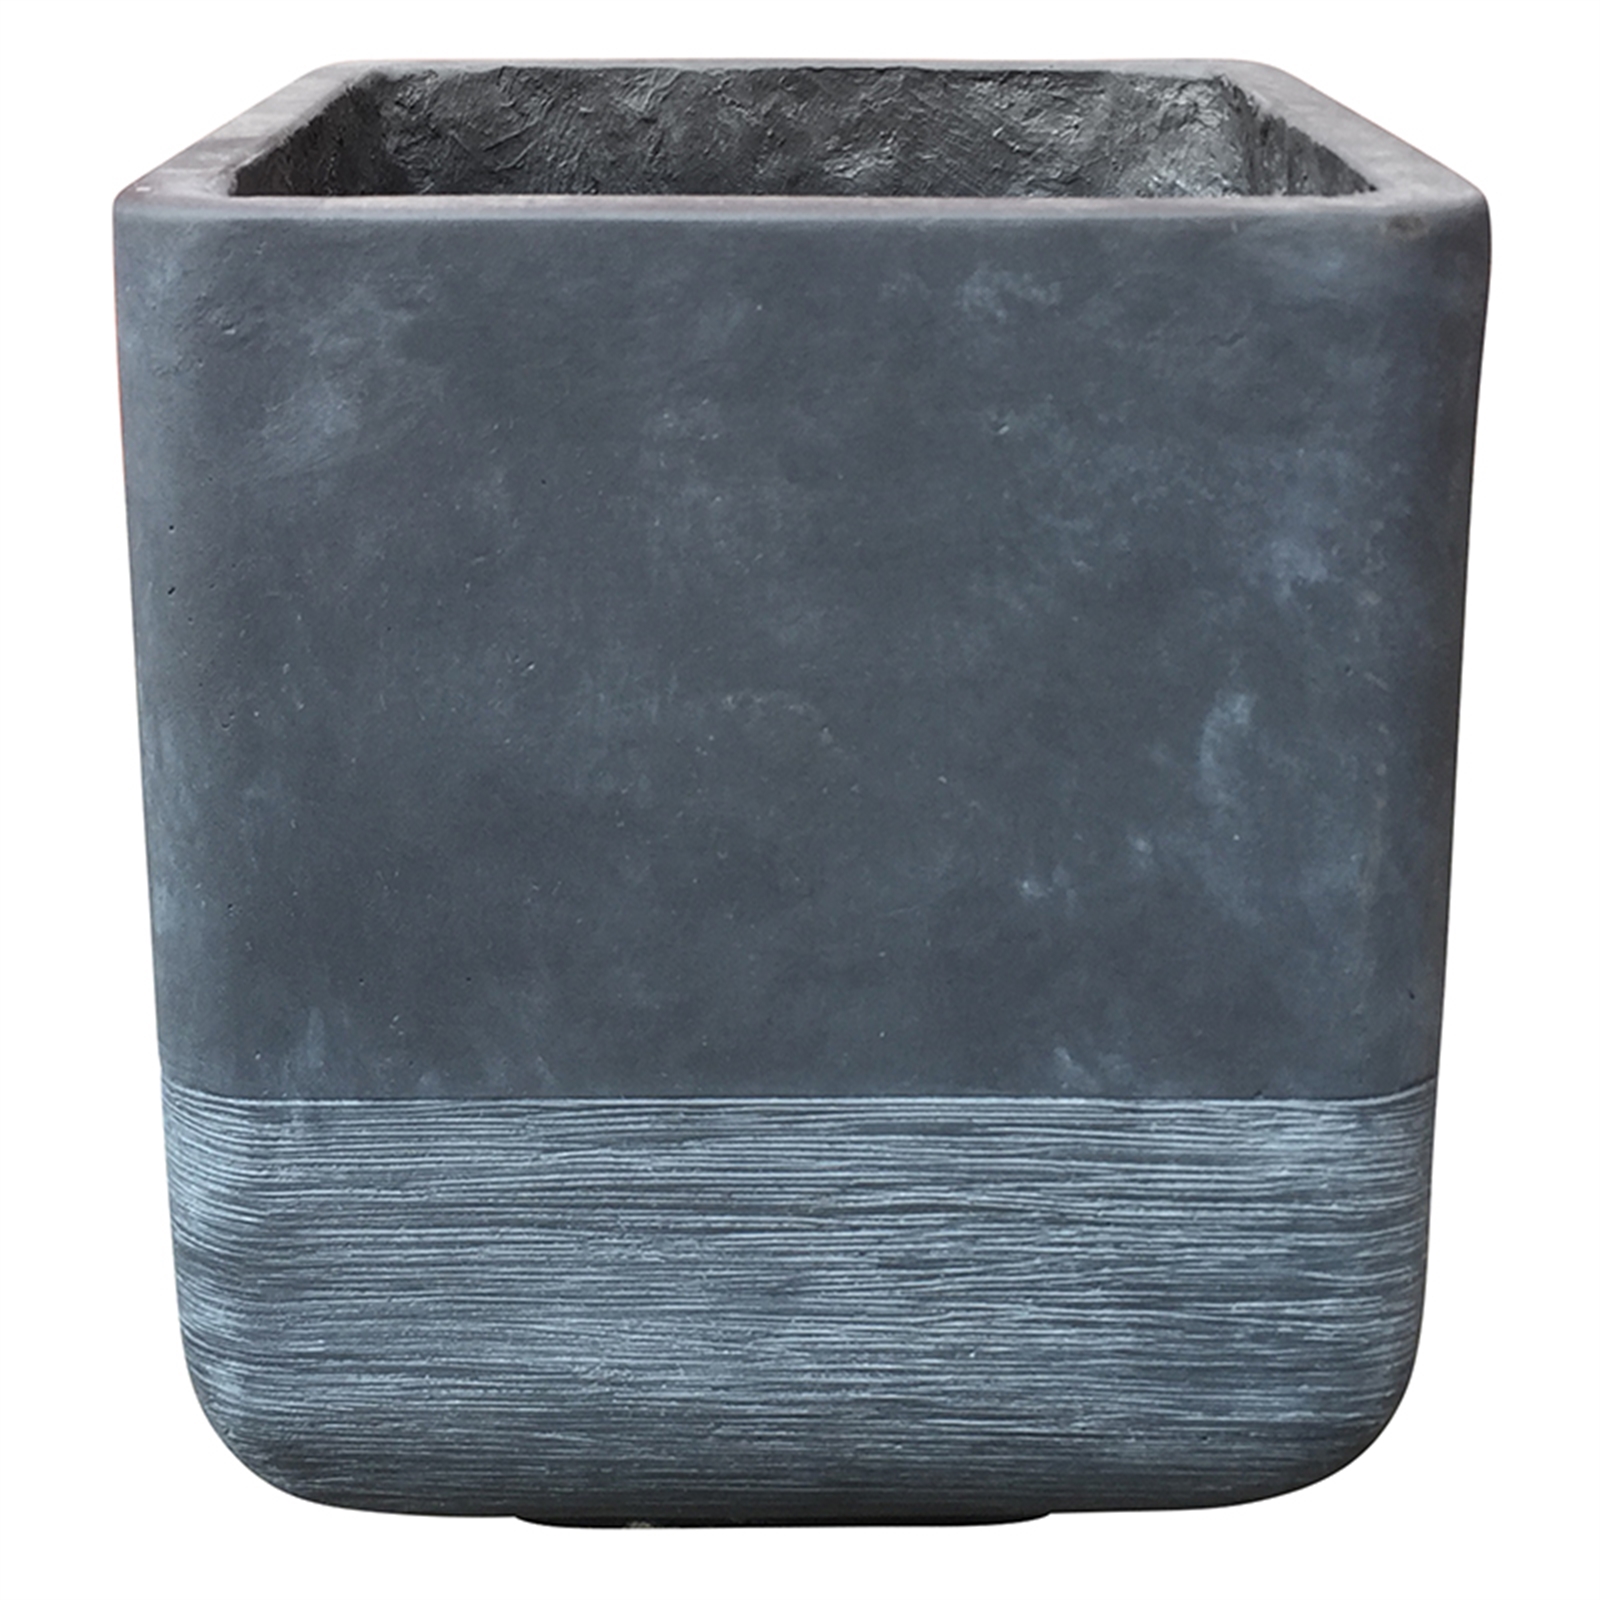 Northcote Pottery 22 x 25cm Charcoal UrbanLITE Infinity Cube Planter